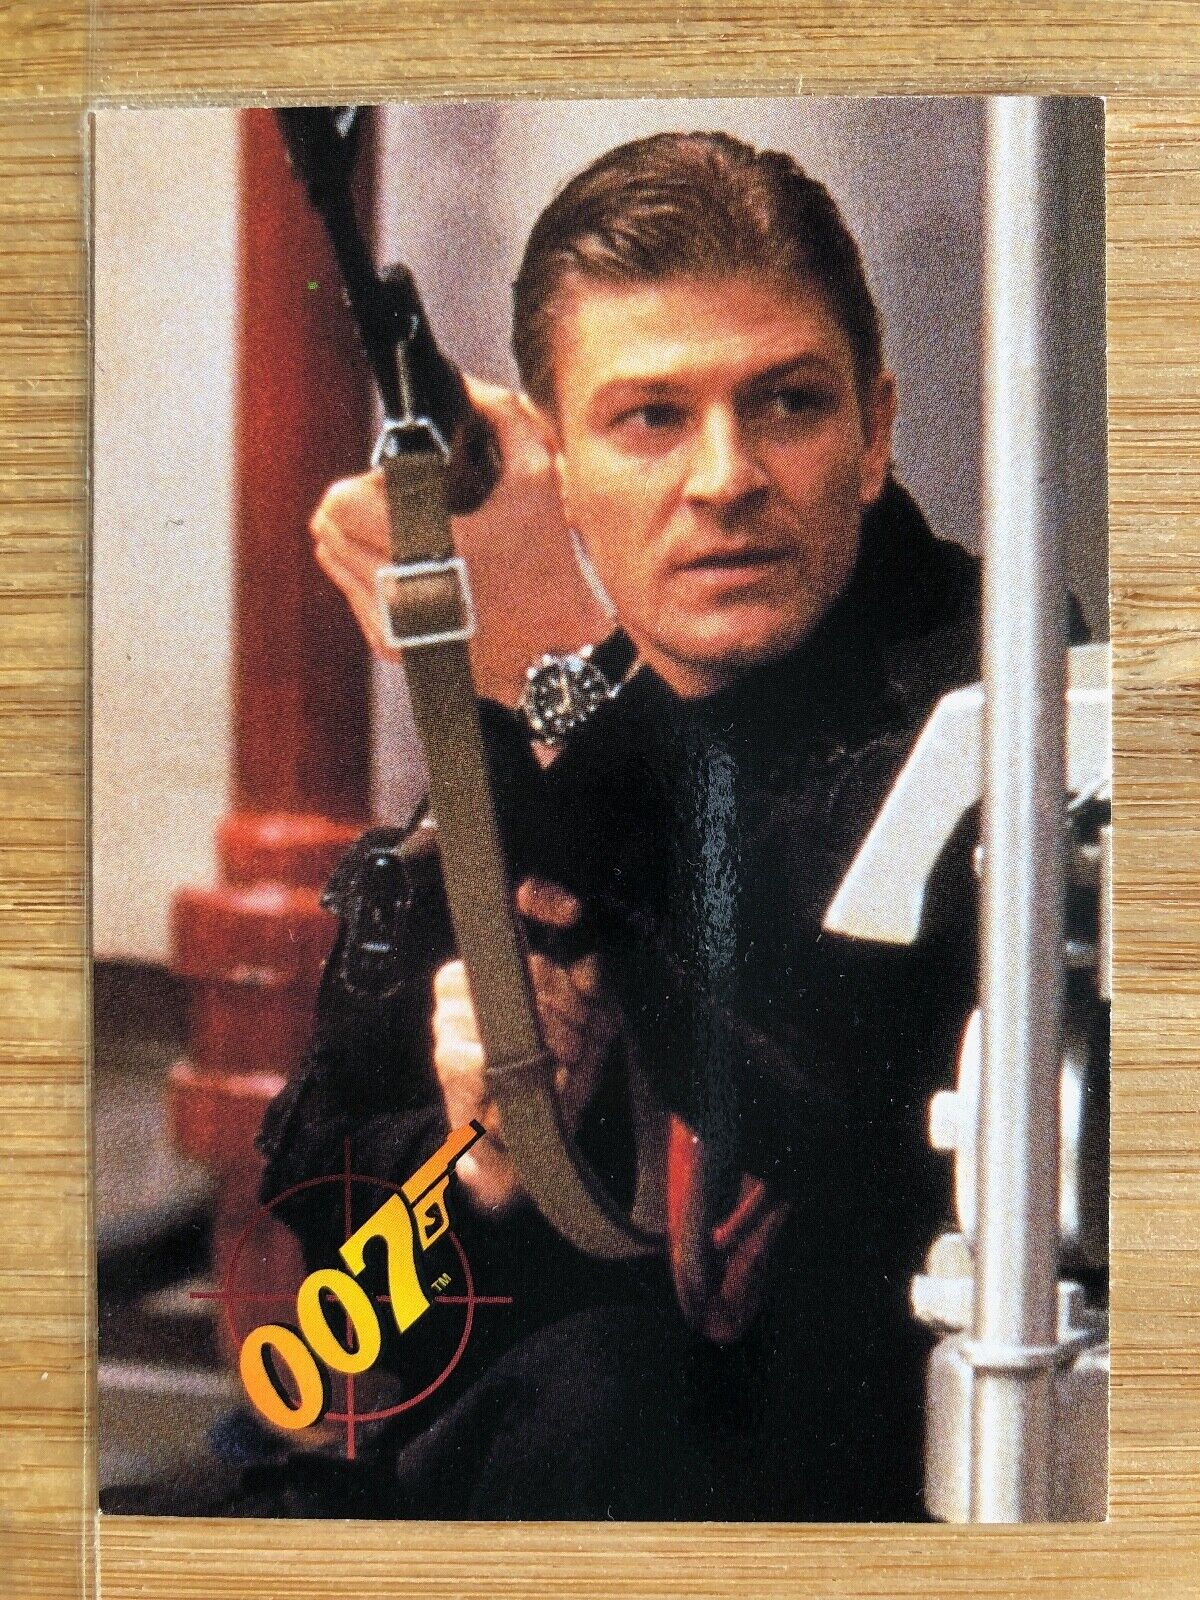 James Bond: Goldeneye movie trading card base set single cards by Graffiti 1995